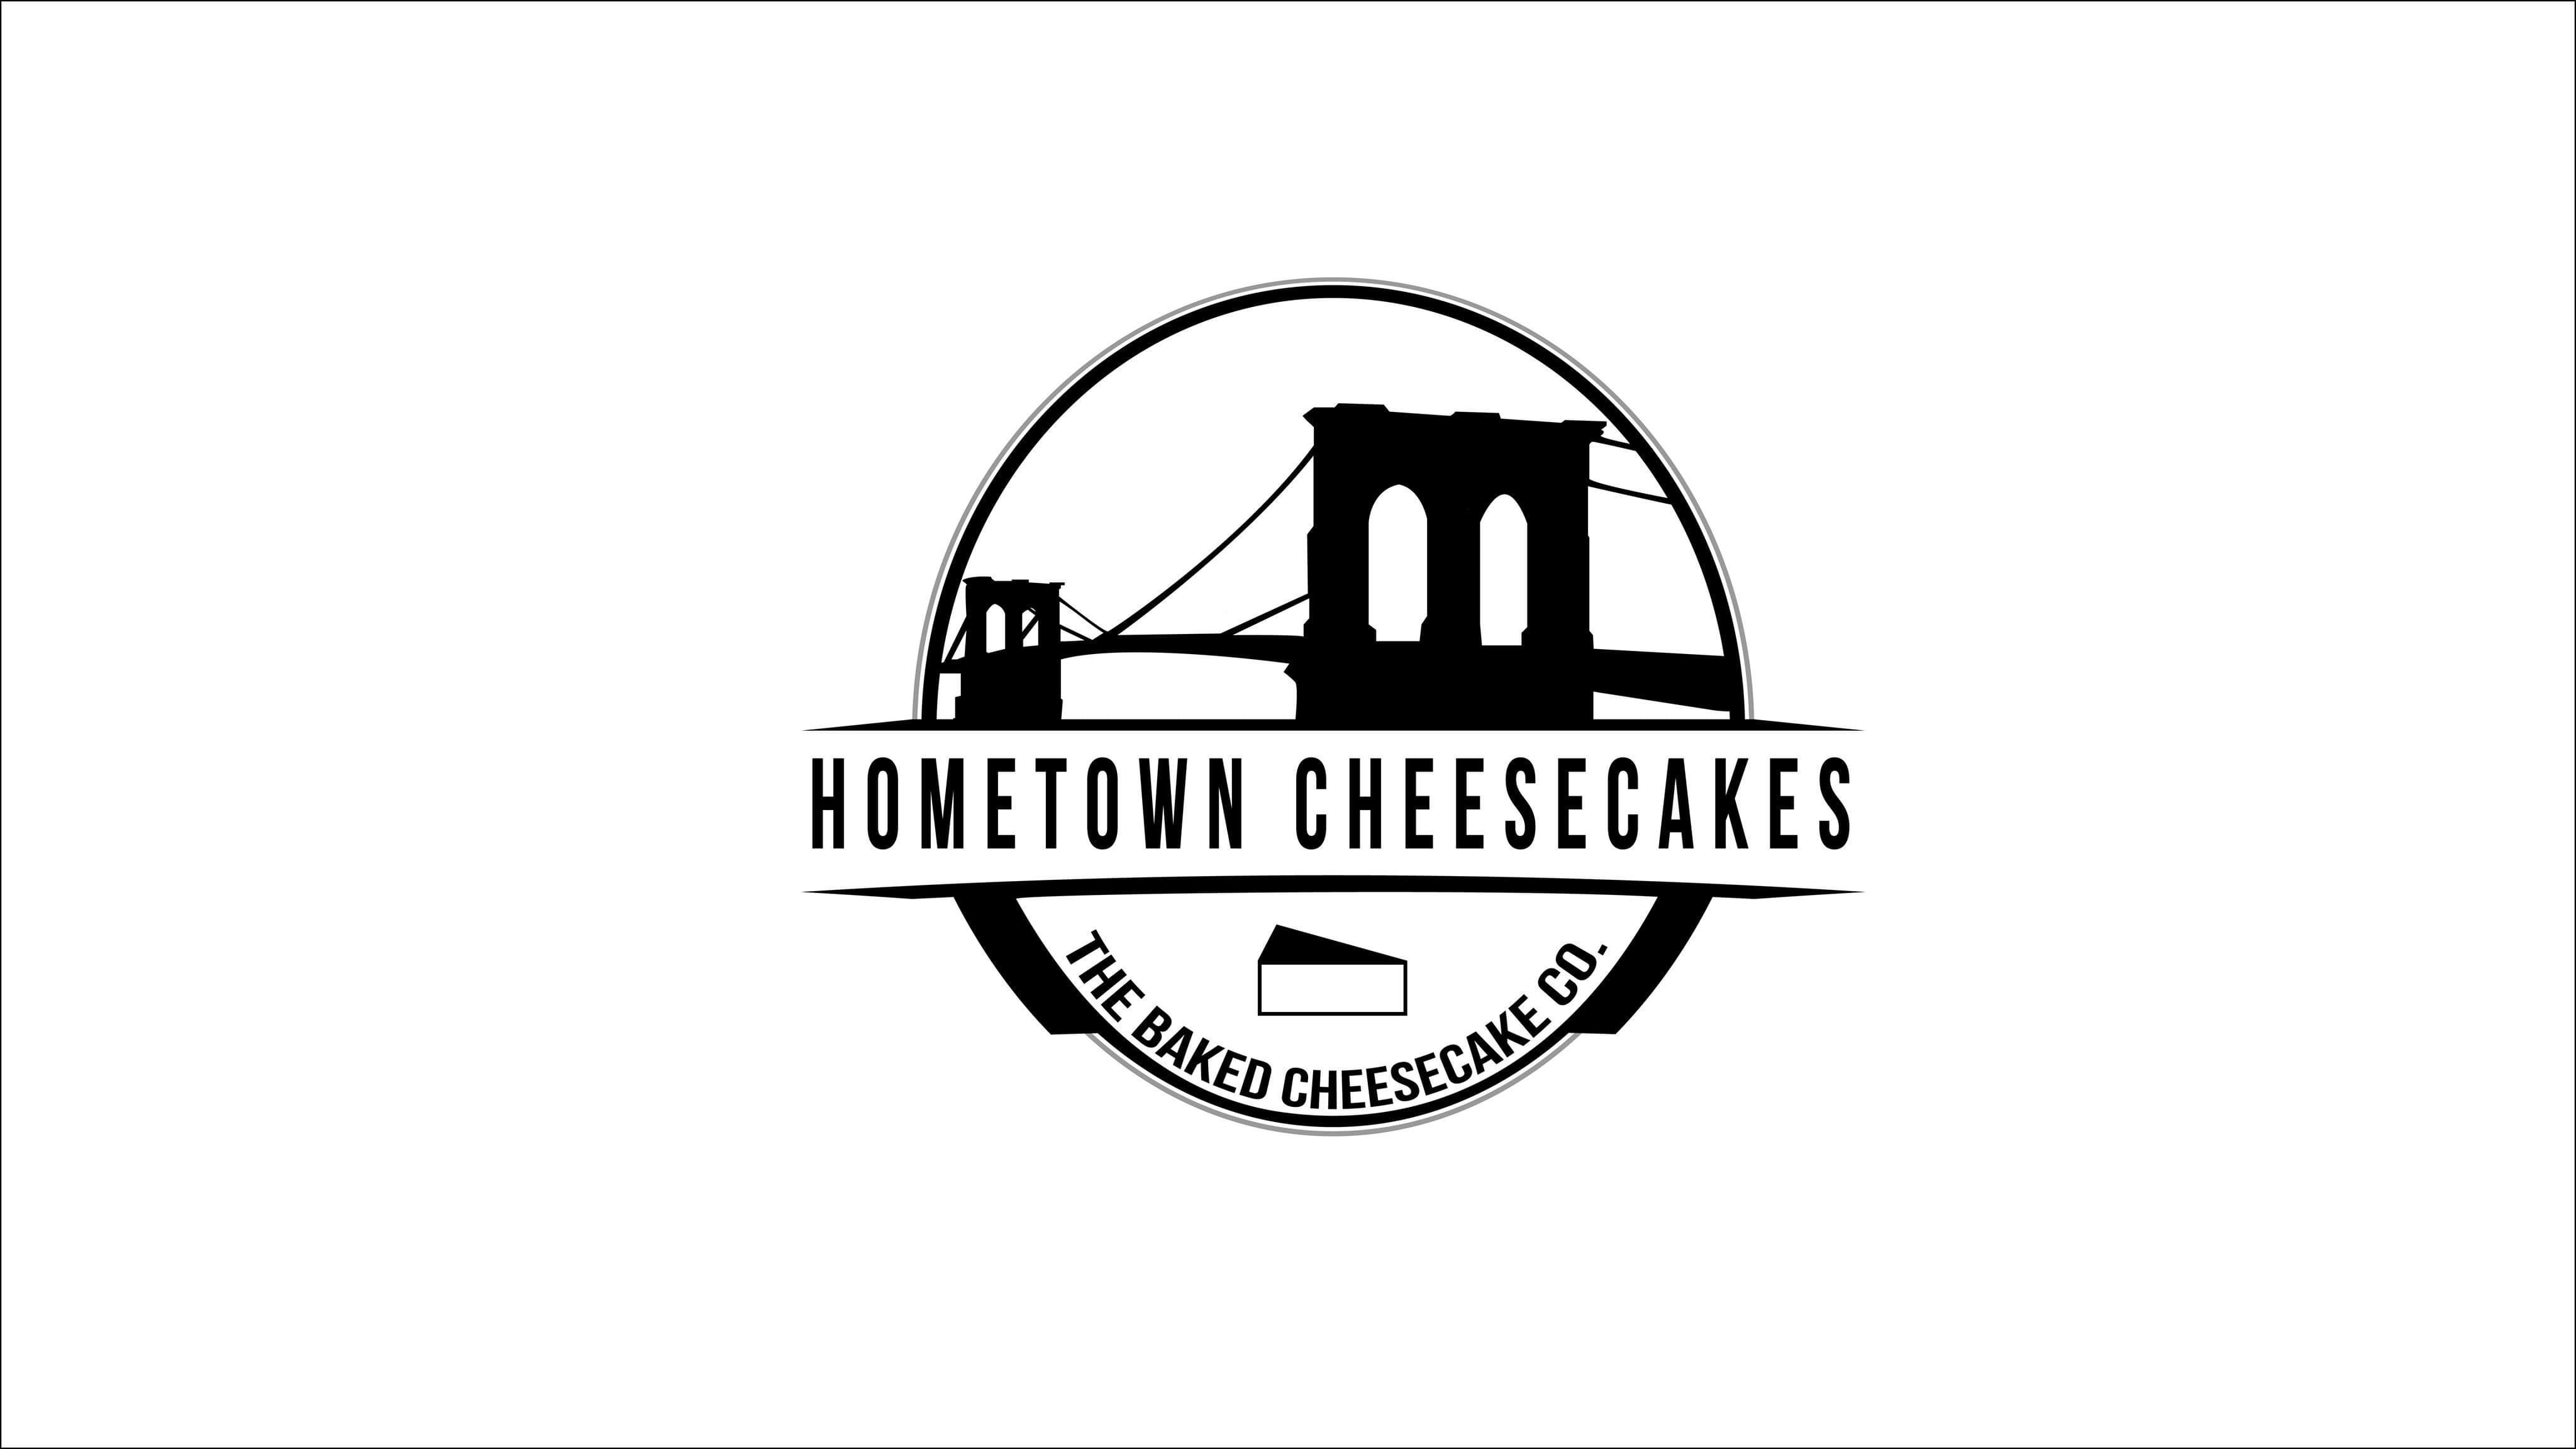 Hometown Cheesecakes